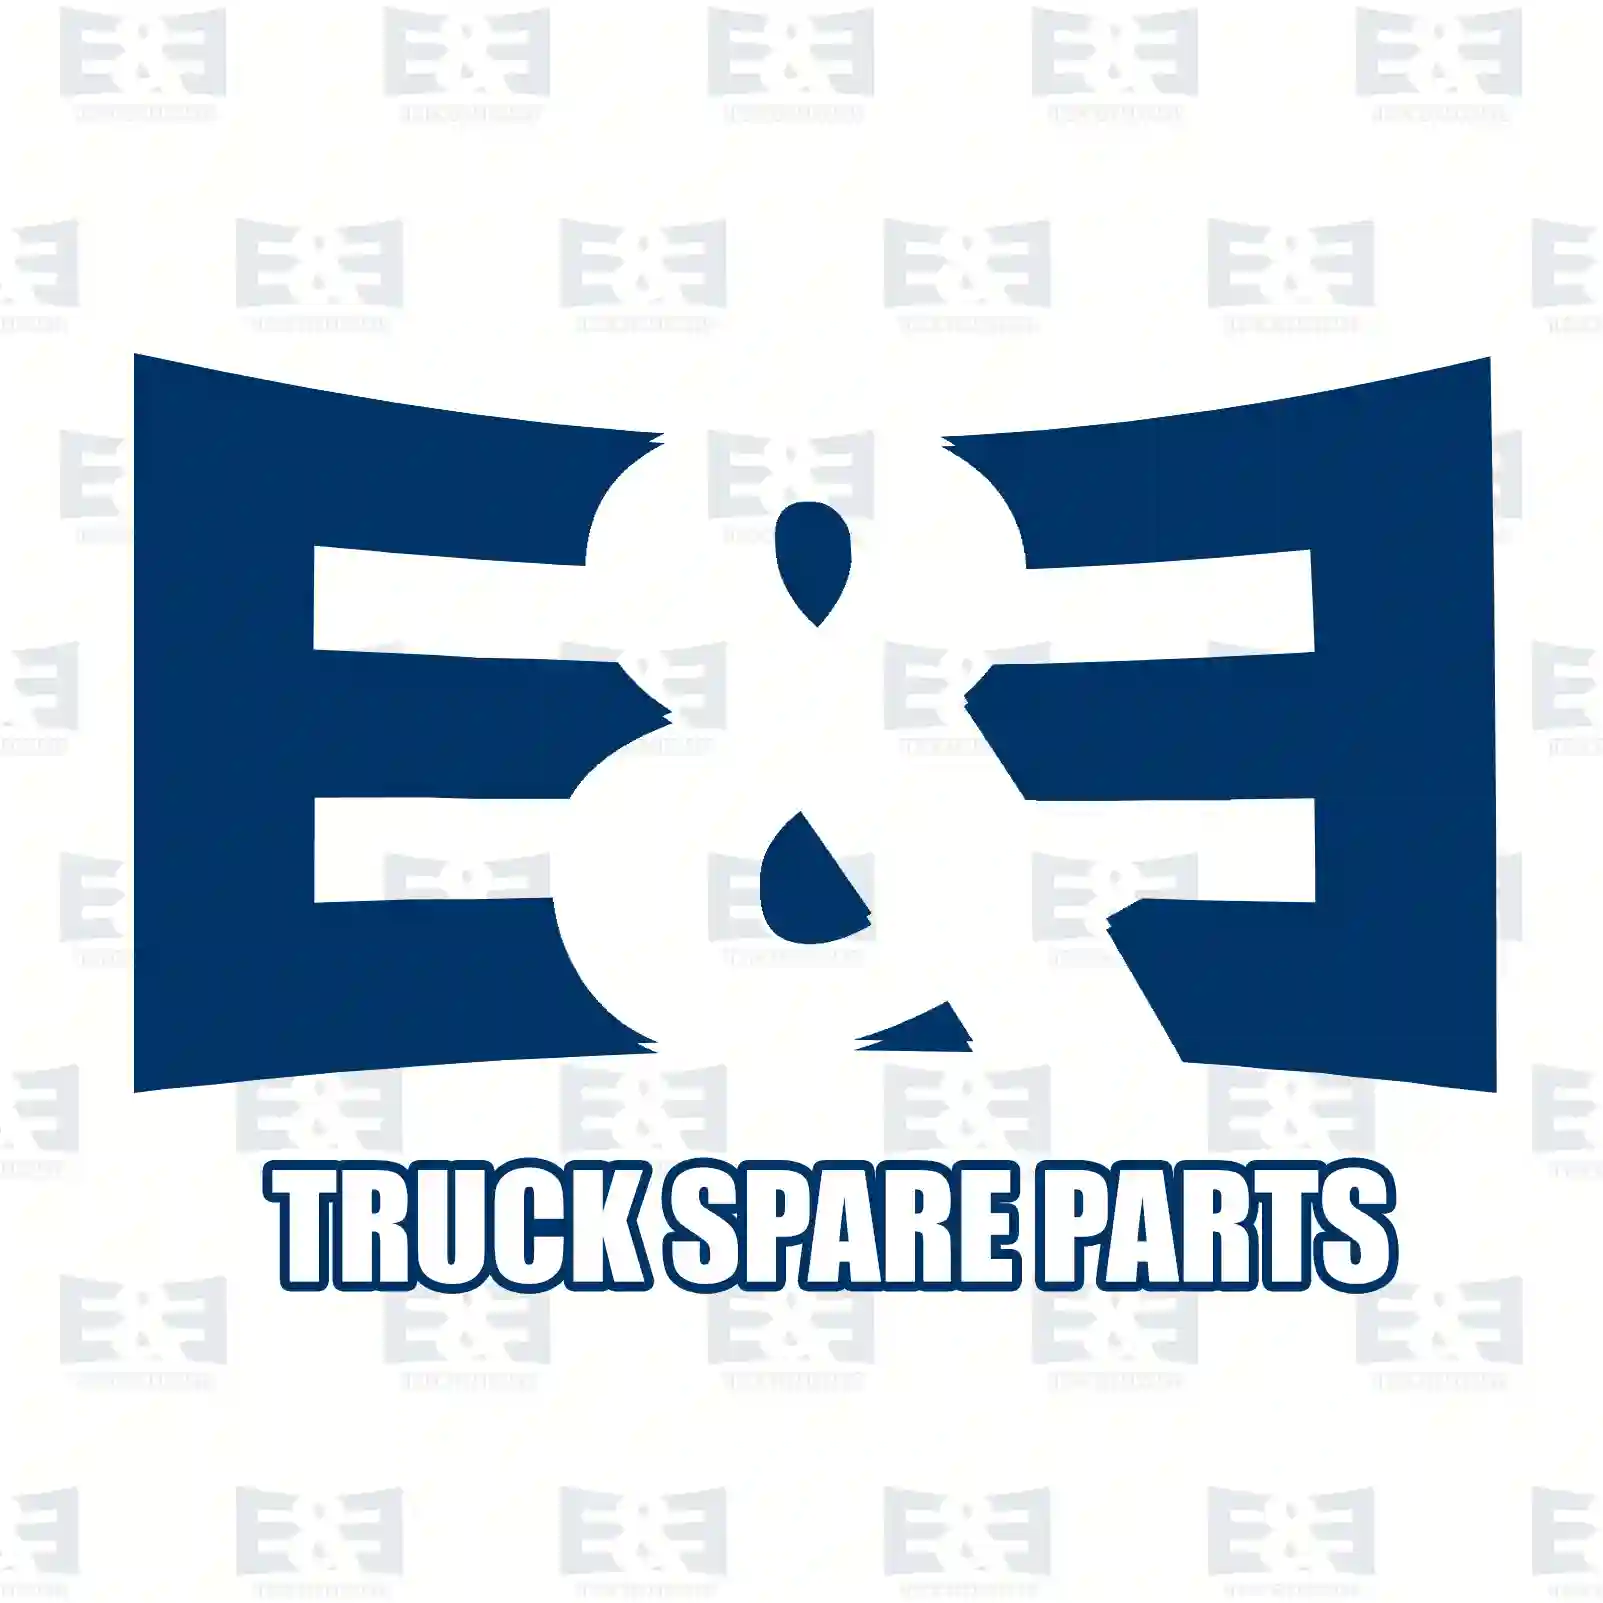 Input shaft, 2E2278953, 7421021416, 21021416, 22502019 ||  2E2278953 E&E Truck Spare Parts | Truck Spare Parts, Auotomotive Spare Parts Input shaft, 2E2278953, 7421021416, 21021416, 22502019 ||  2E2278953 E&E Truck Spare Parts | Truck Spare Parts, Auotomotive Spare Parts